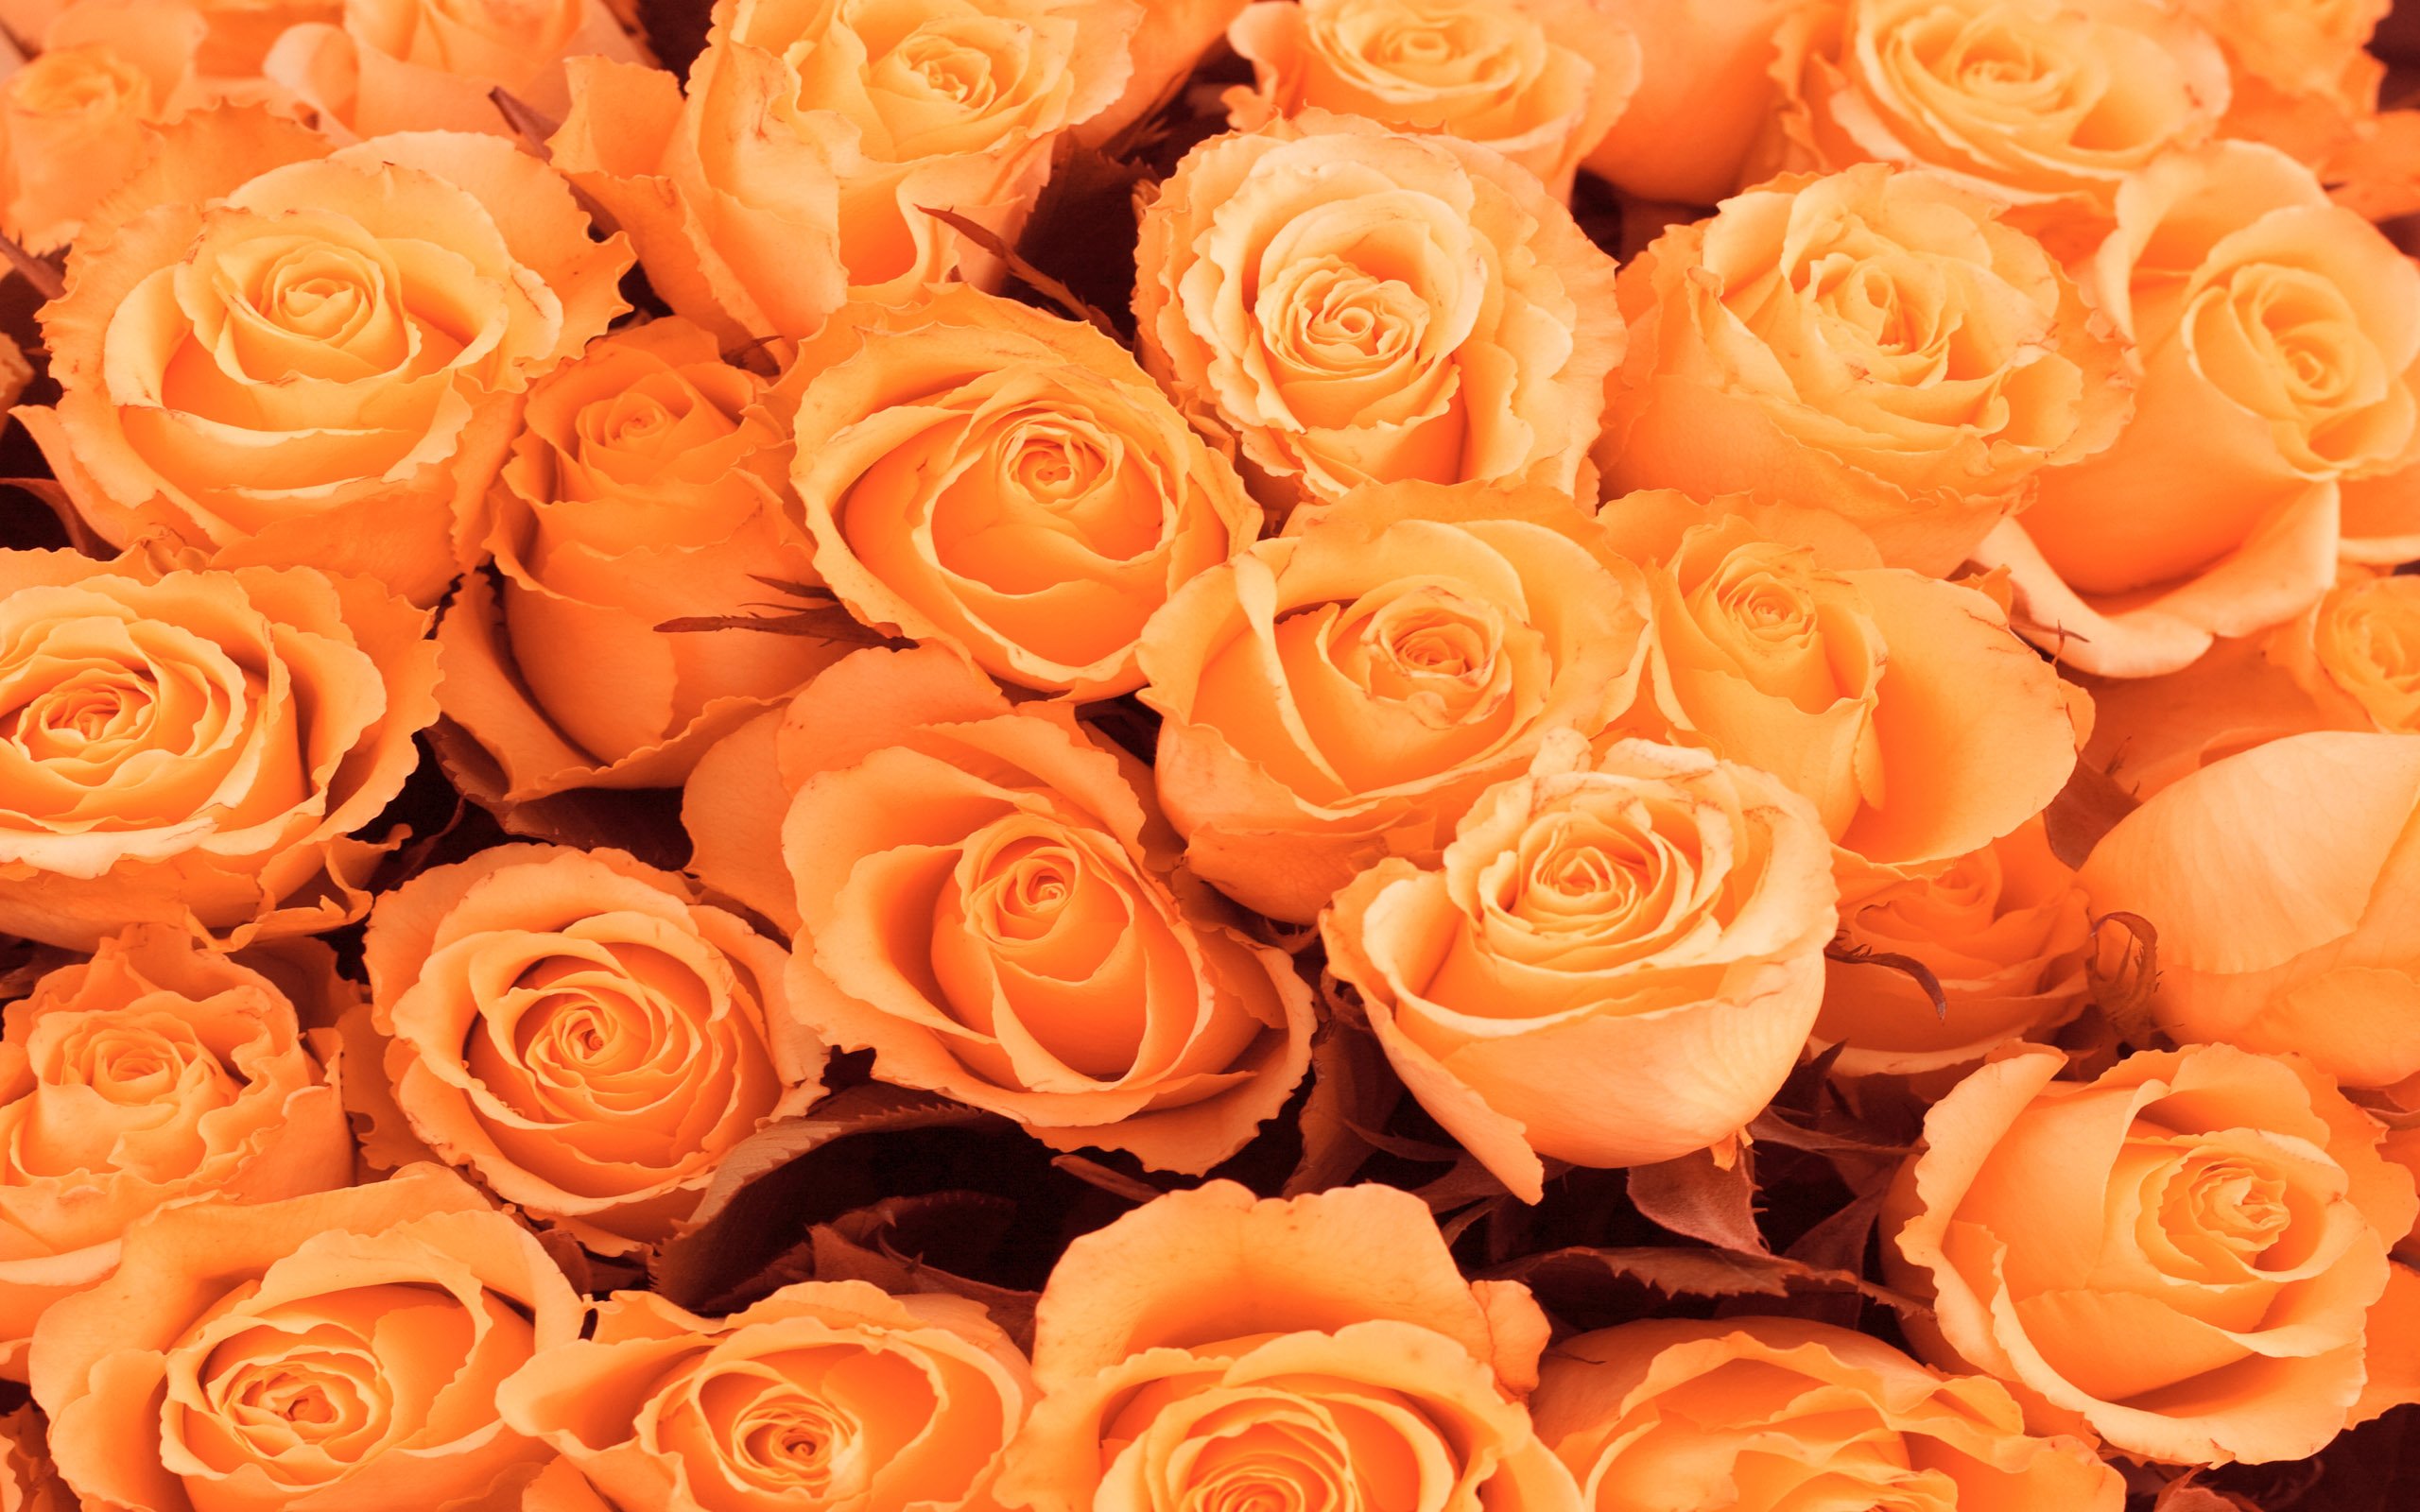 Orange Roses wallpaper 2560x1600 66544